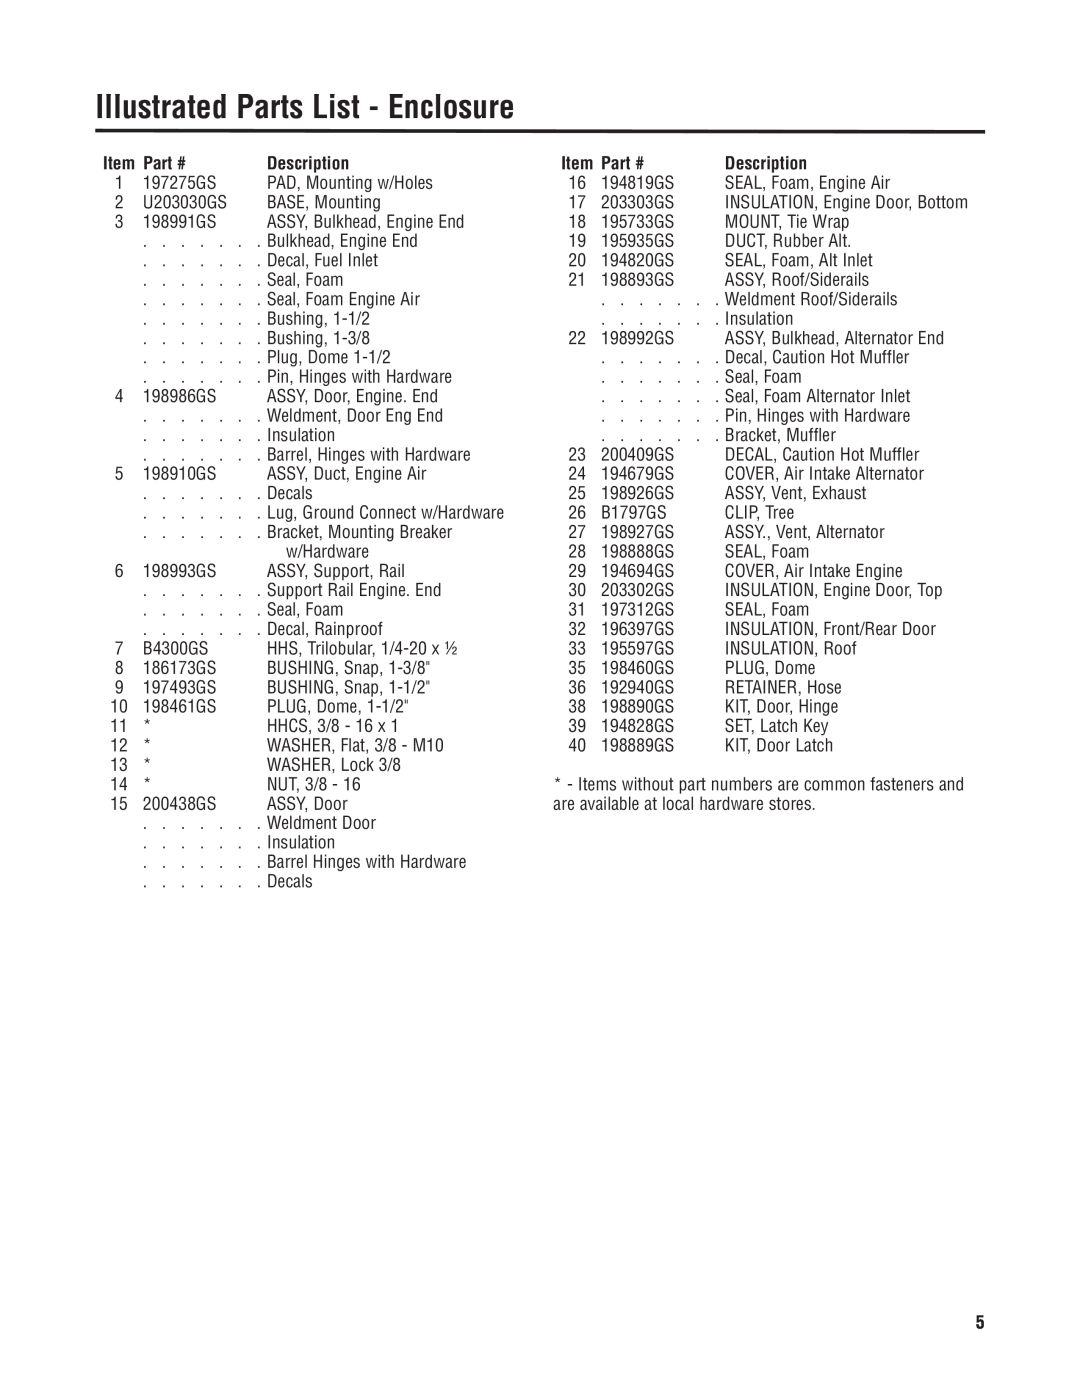 Briggs & Stratton 040234-1 manual Illustrated Parts List - Enclosure, Description 